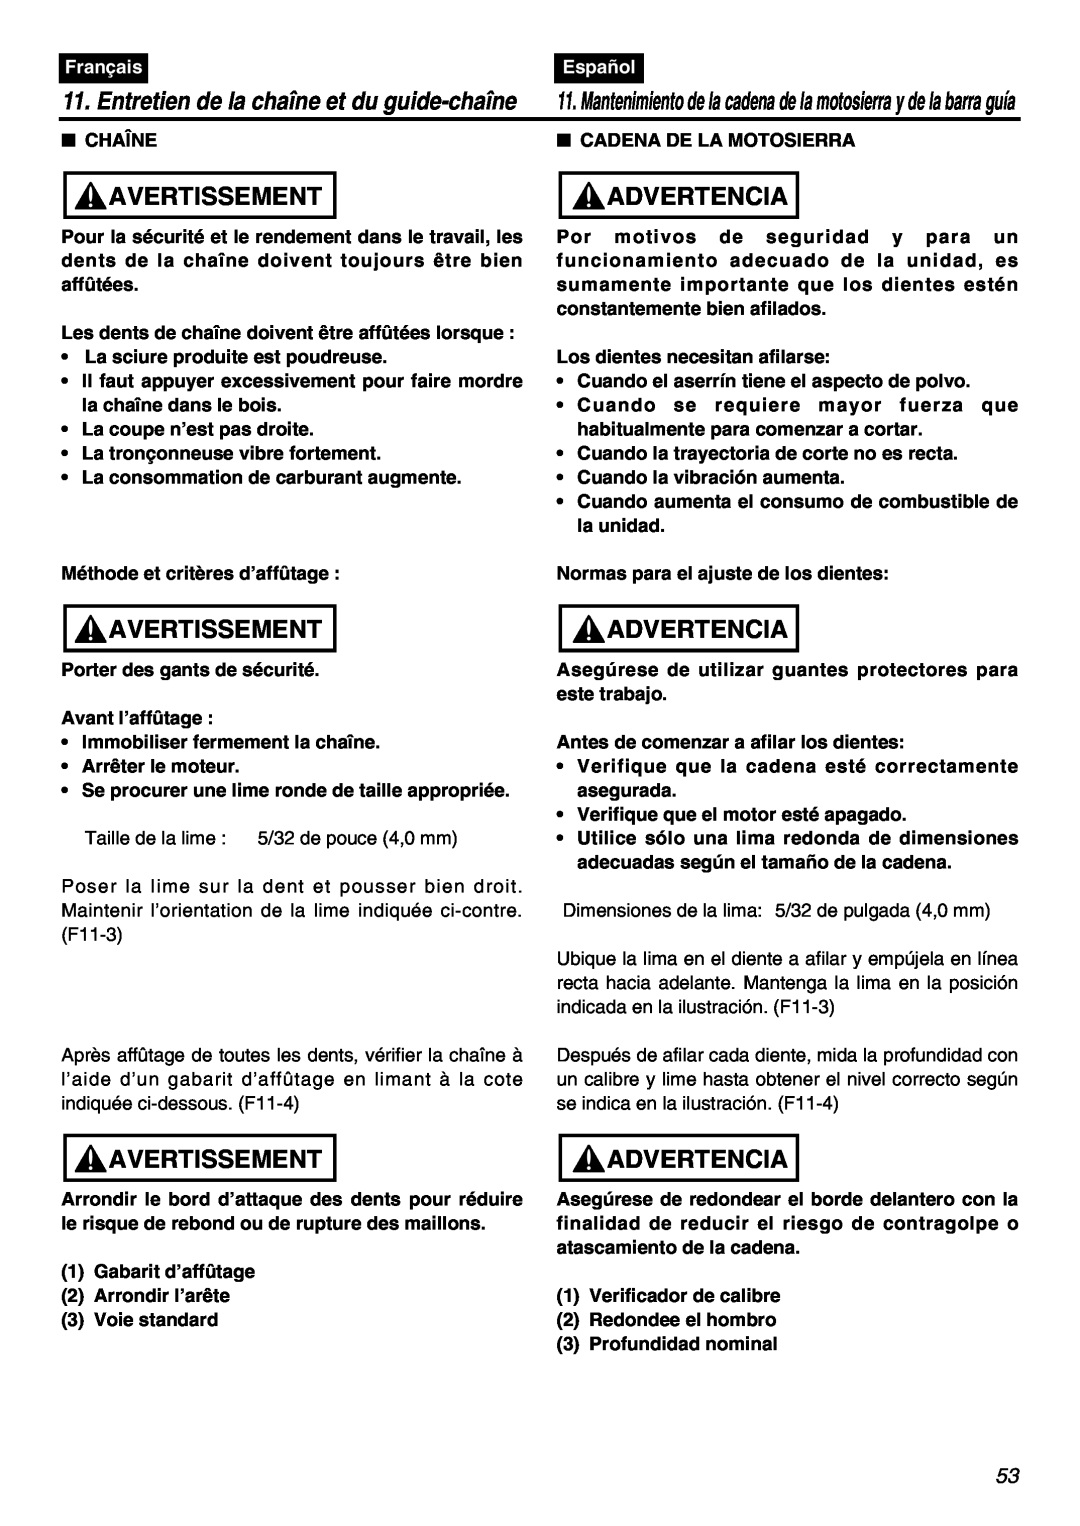 RedMax GZ400 manual Entretien de la chaîne et du guide-chaîne, Chaîne, Cadena De La Motosierra, Avertissement, Advertencia 